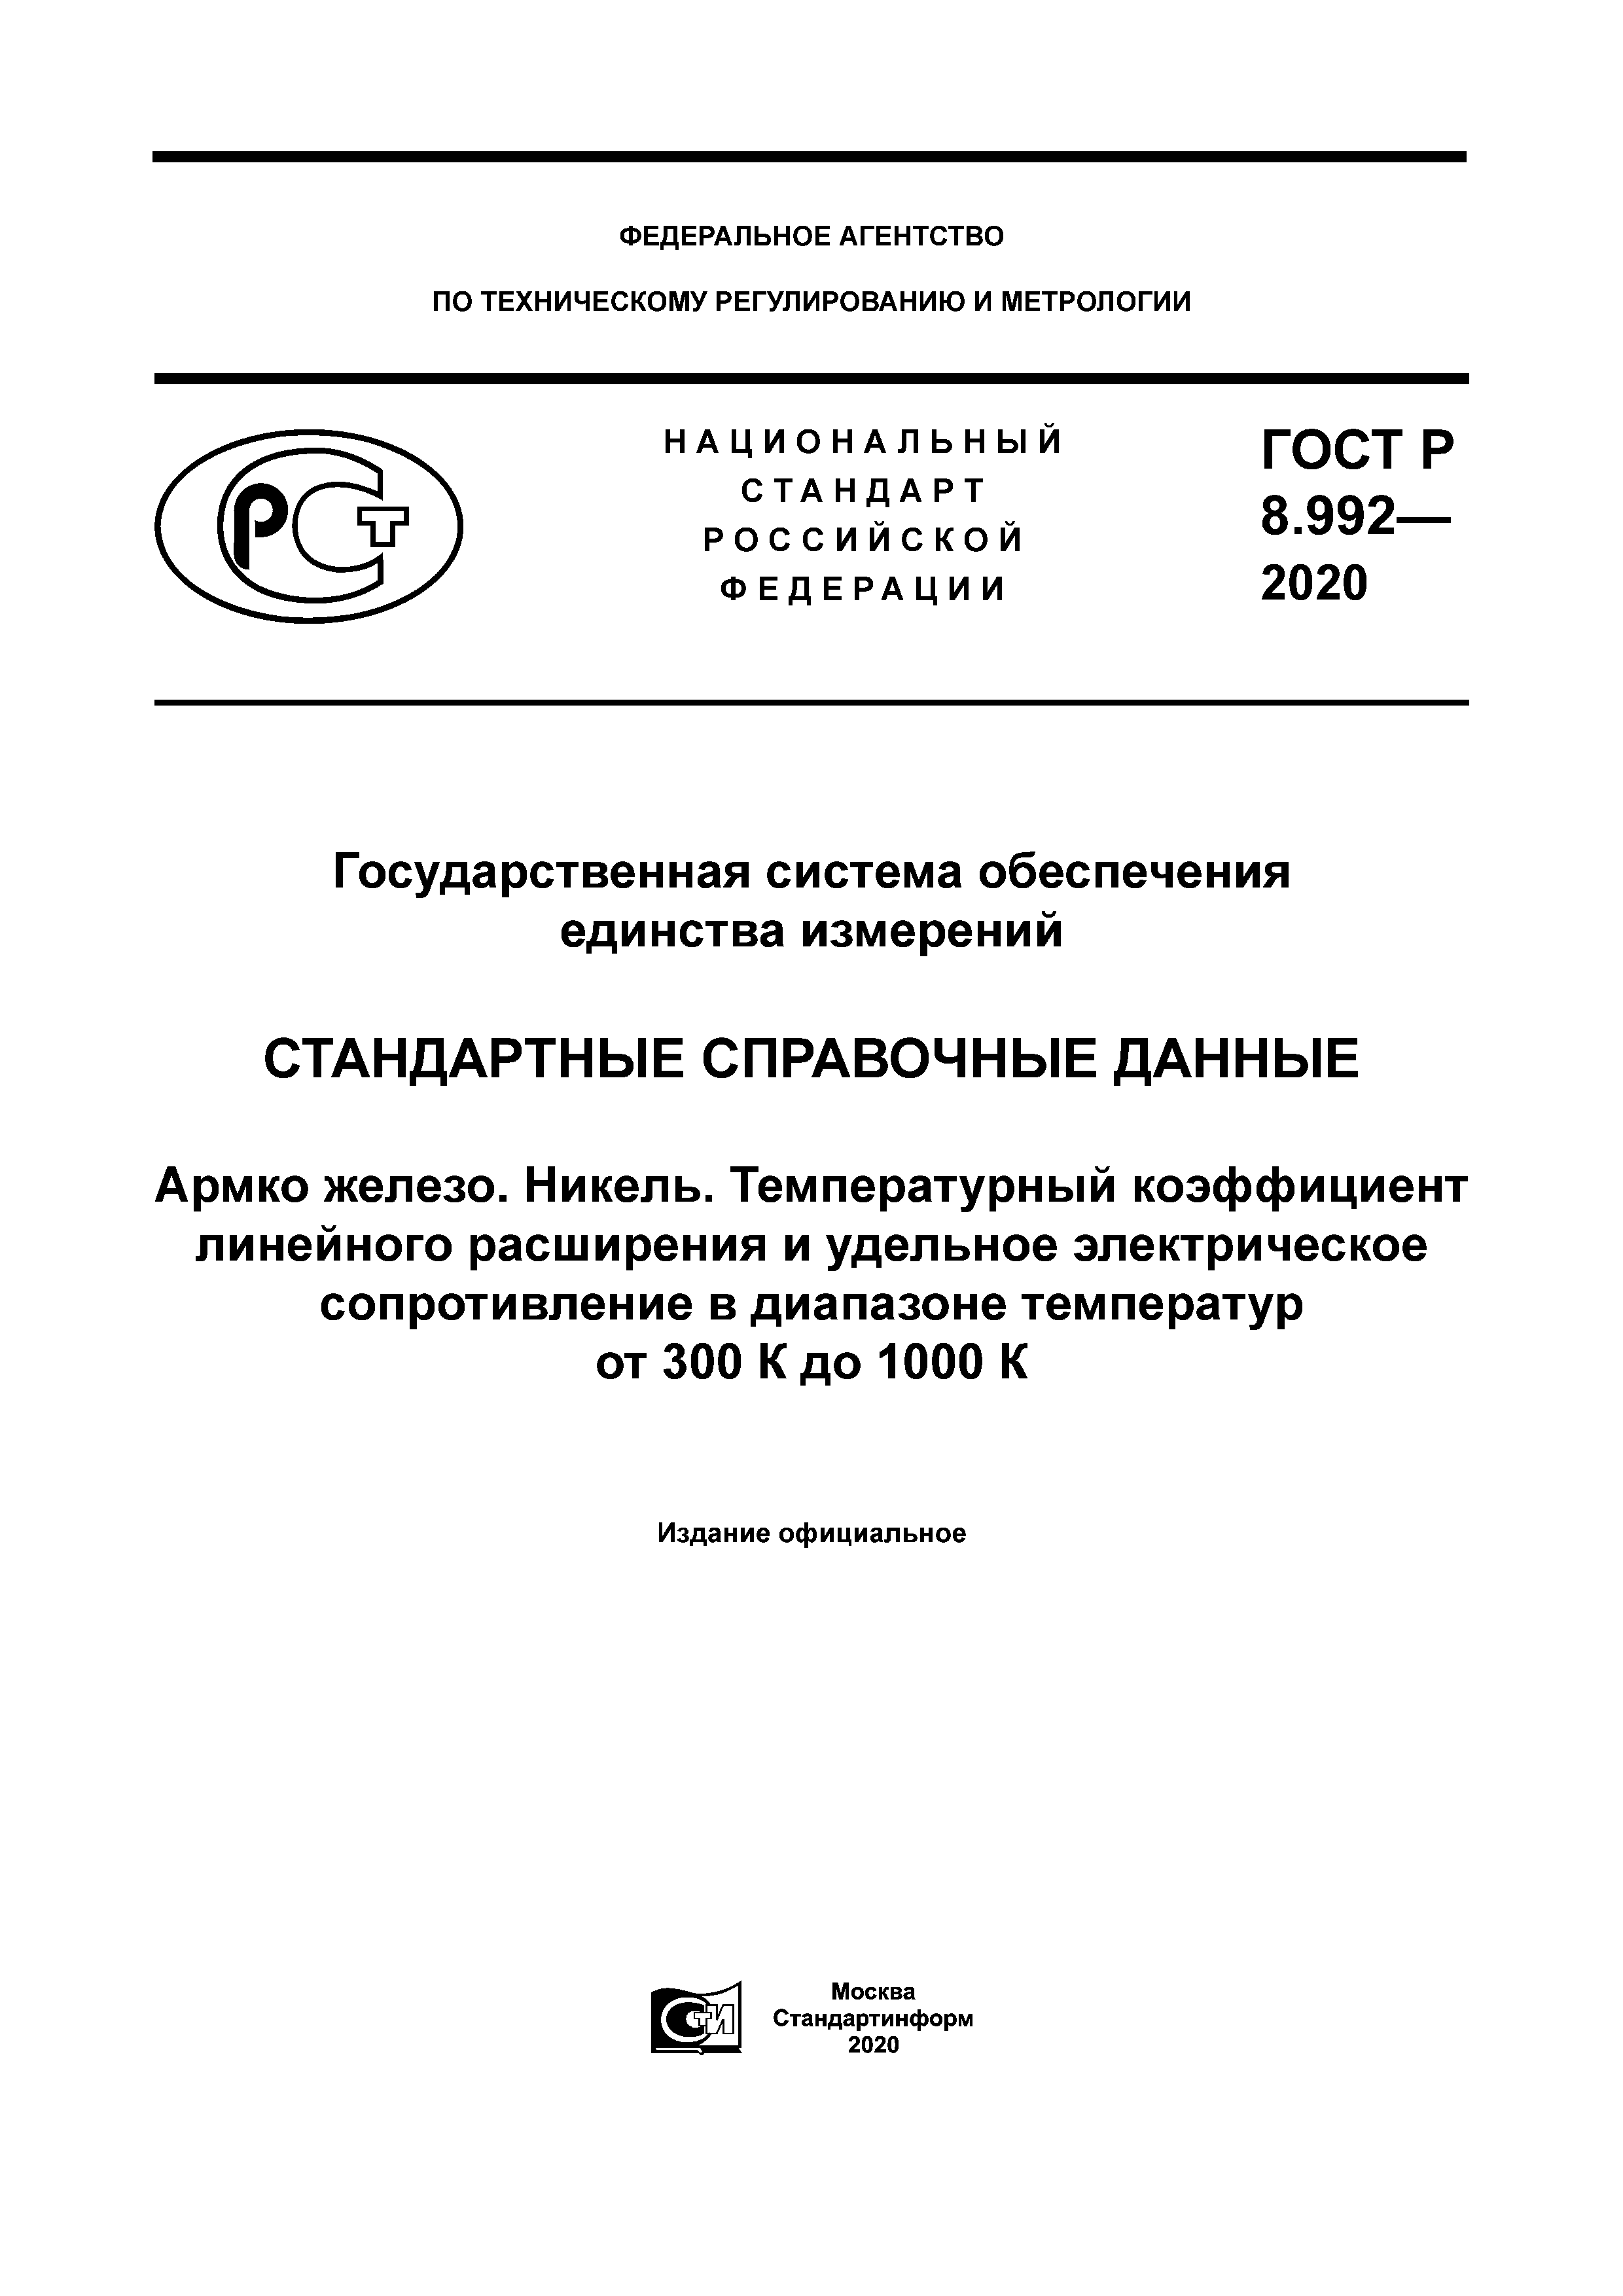 ГОСТ Р 8.992-2020